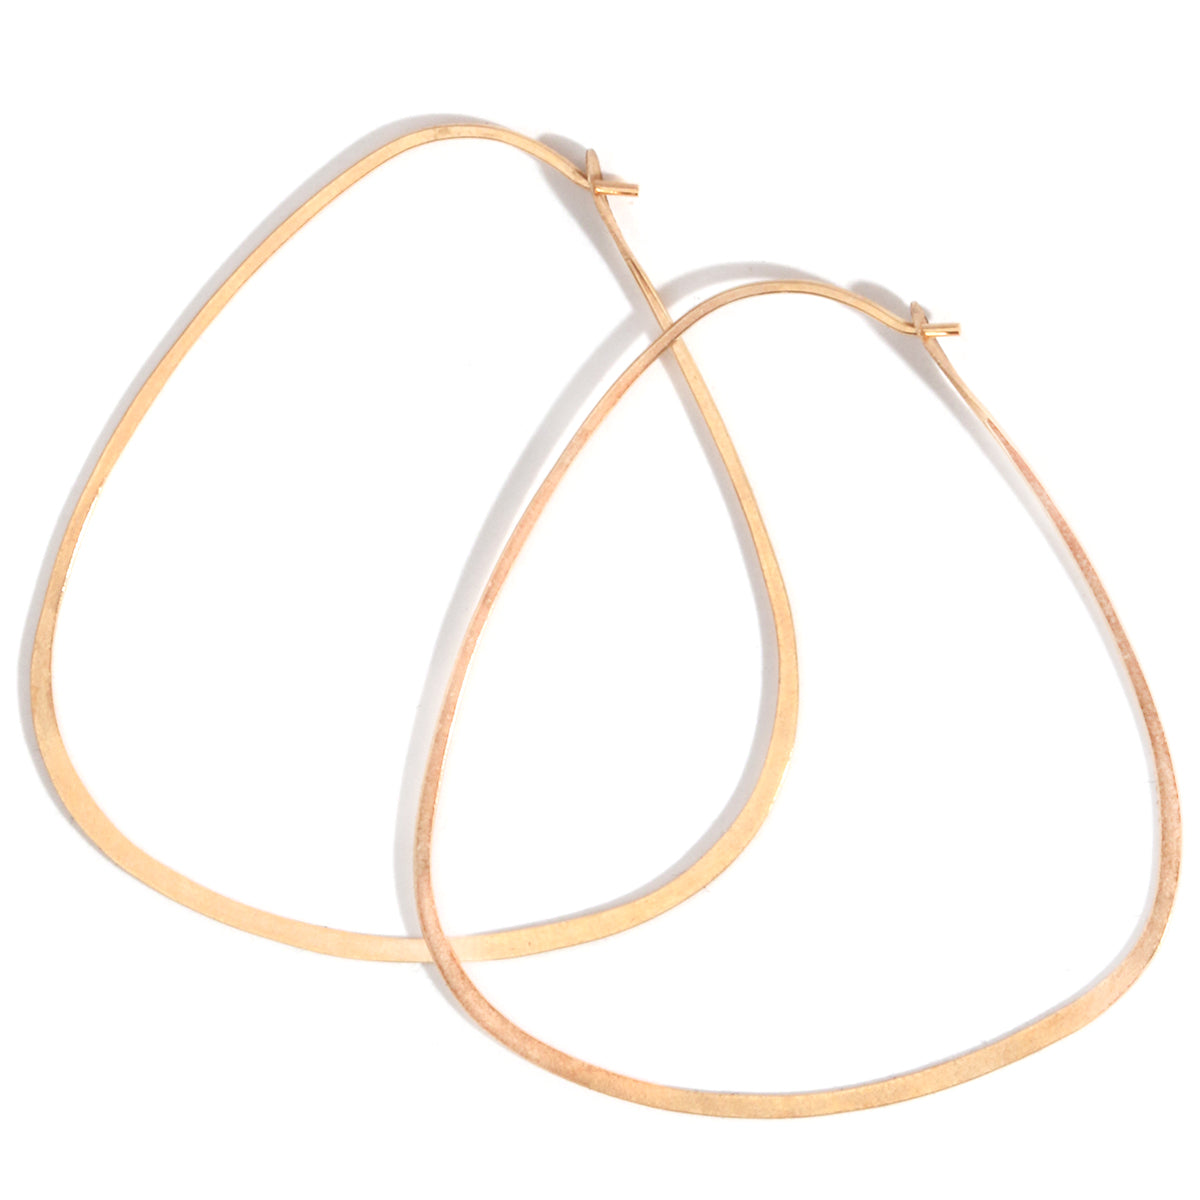 Triangle hoops - 2.5 inch - Melissa Joy Manning Jewelry